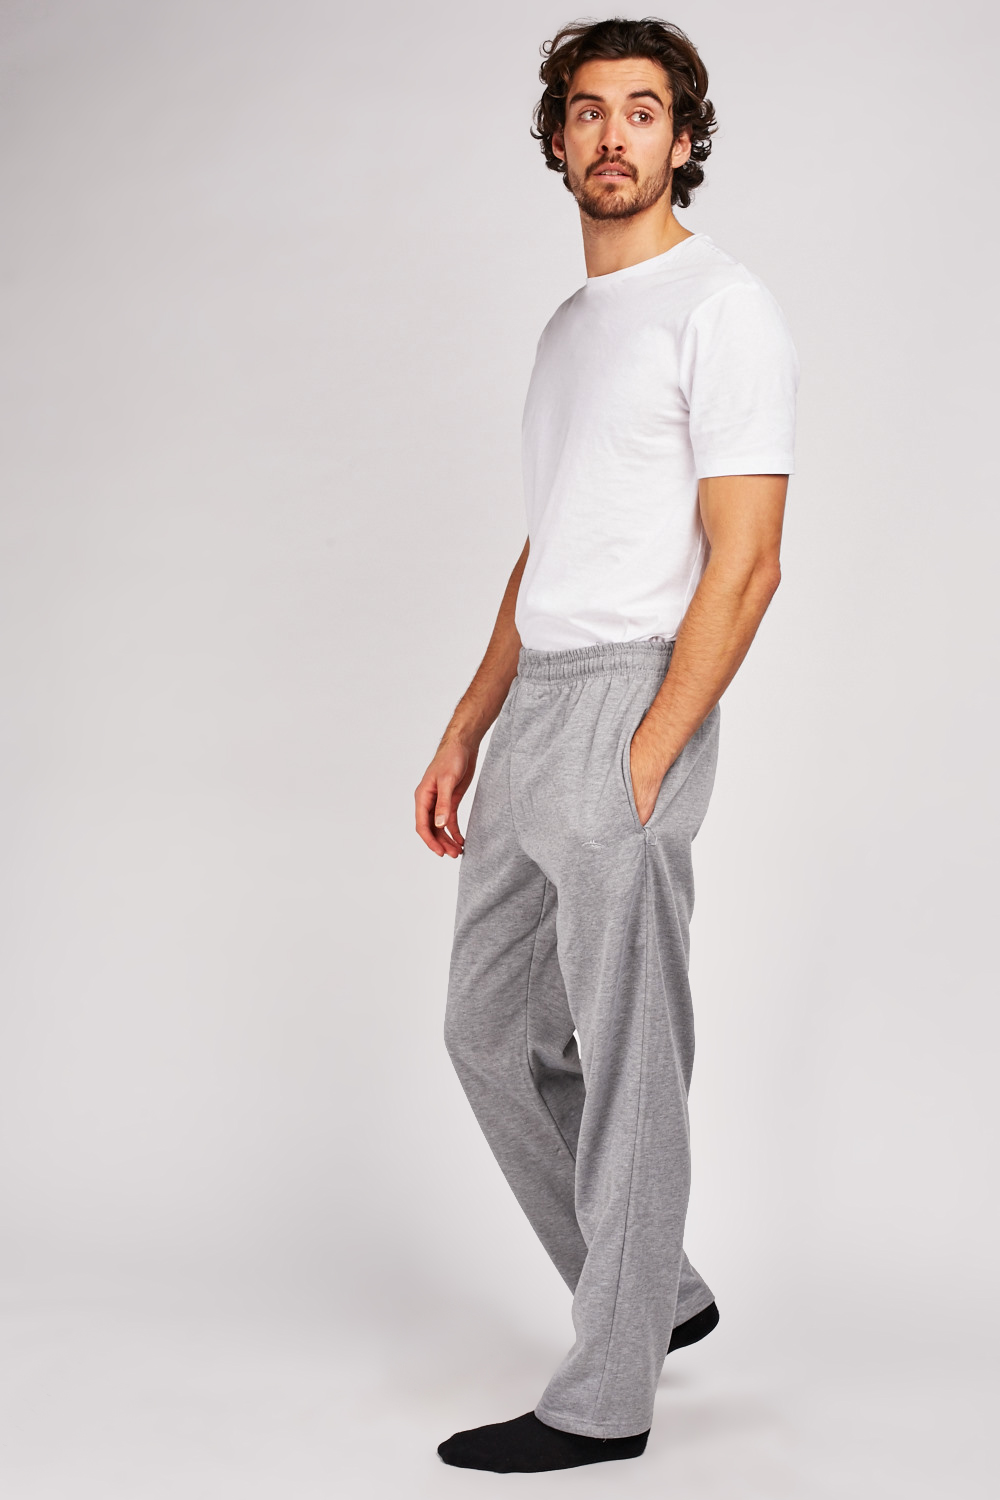 Speckled Grey Jogger Pants - Just $6